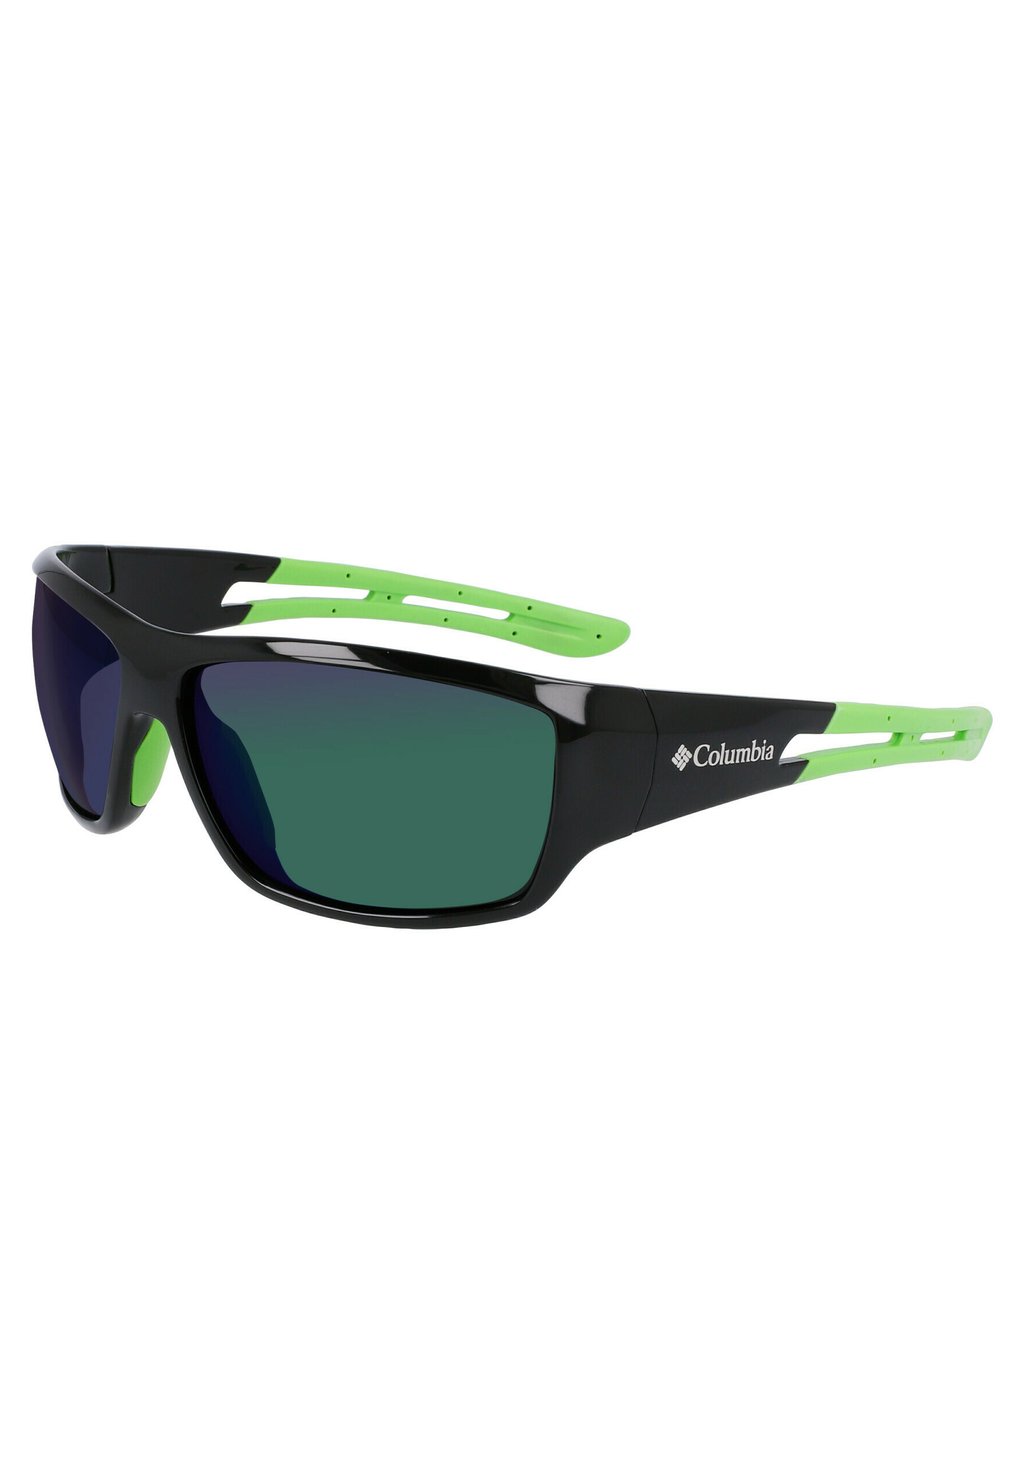 Солнцезащитные очки UTILIZER Columbia, цвет shiny black/green green mirr cyberpunk black green